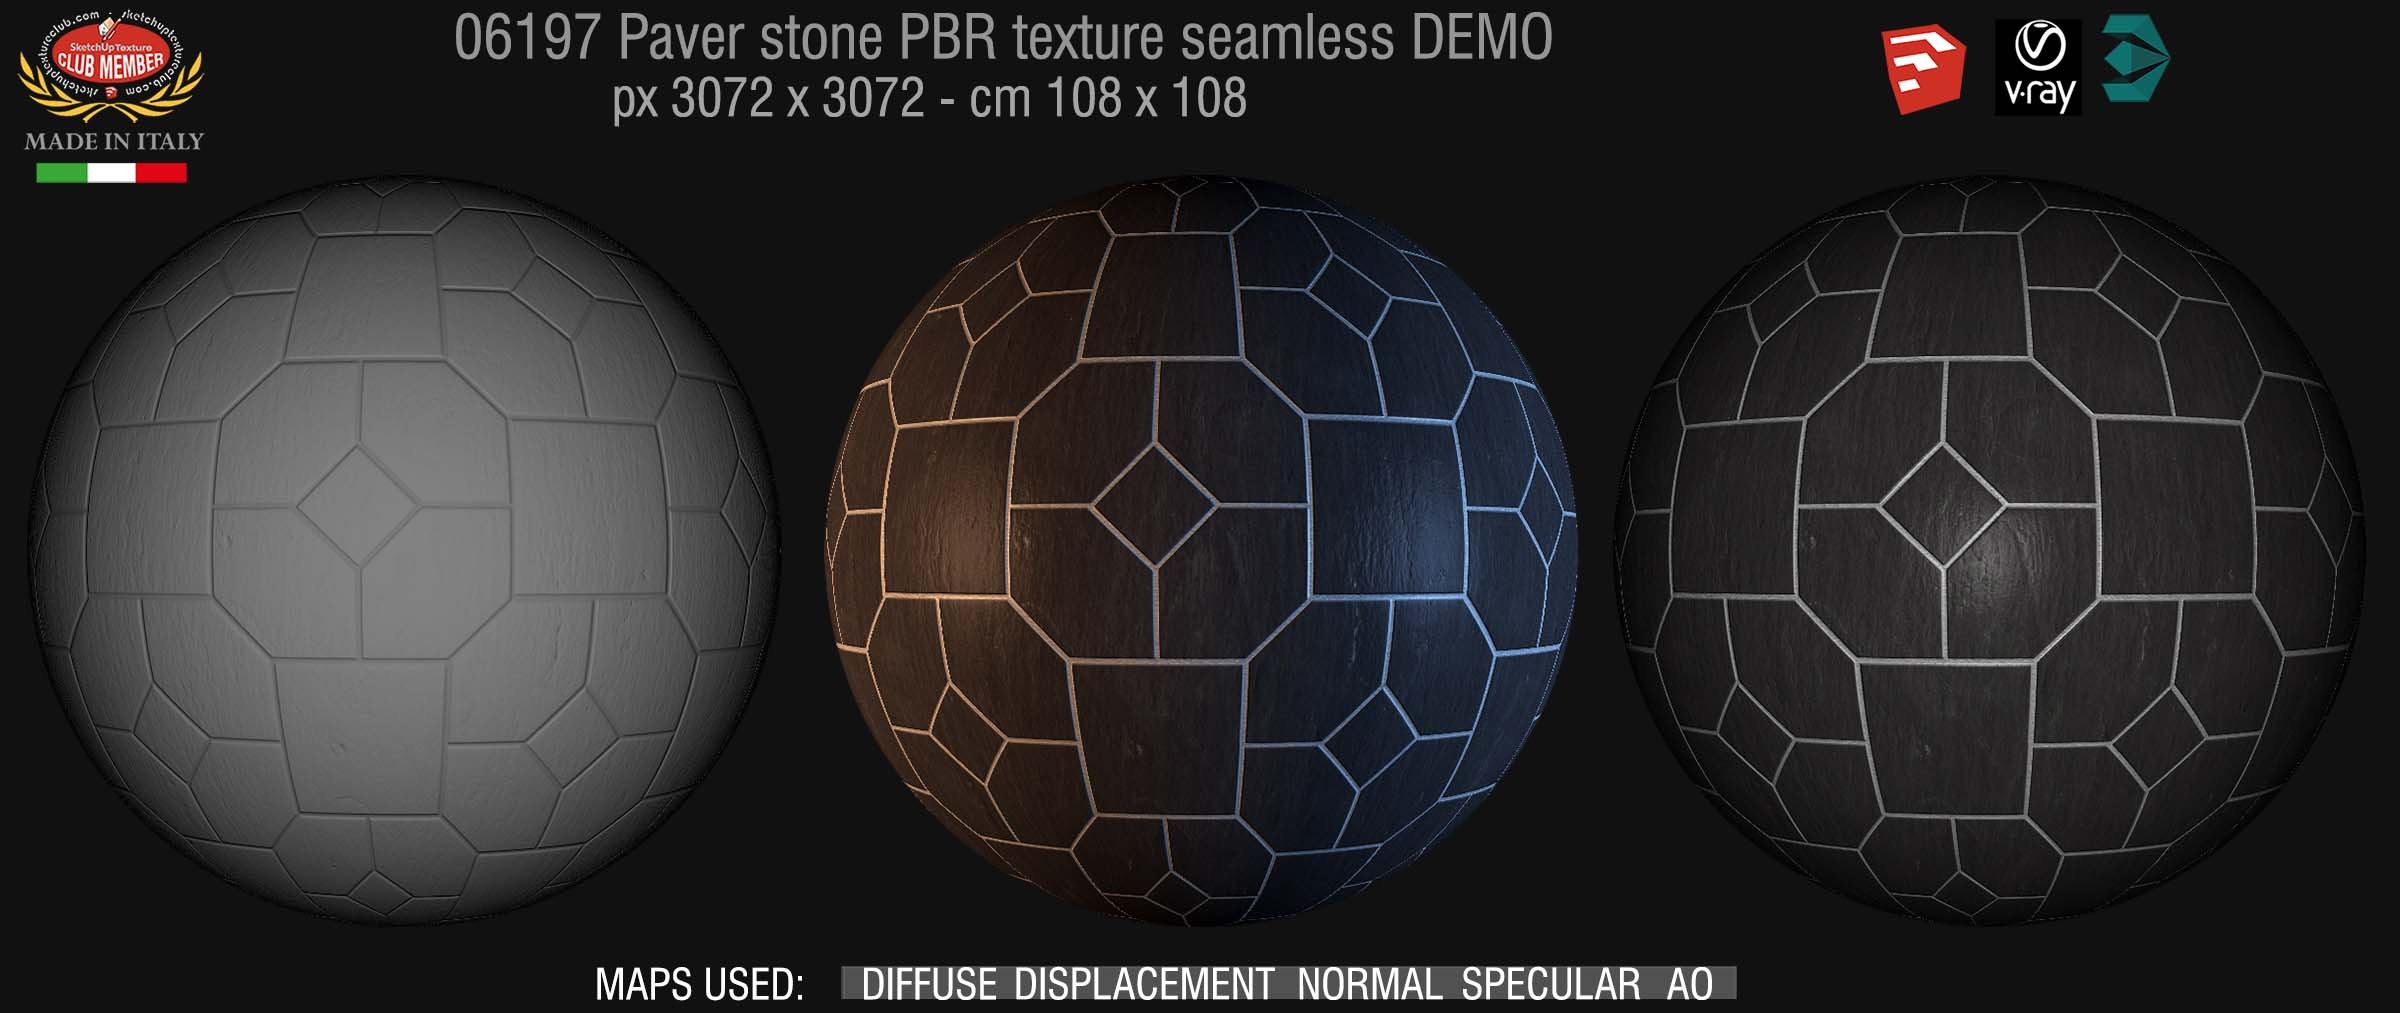 06197 Pavers stone PBR texture seamless DEMO